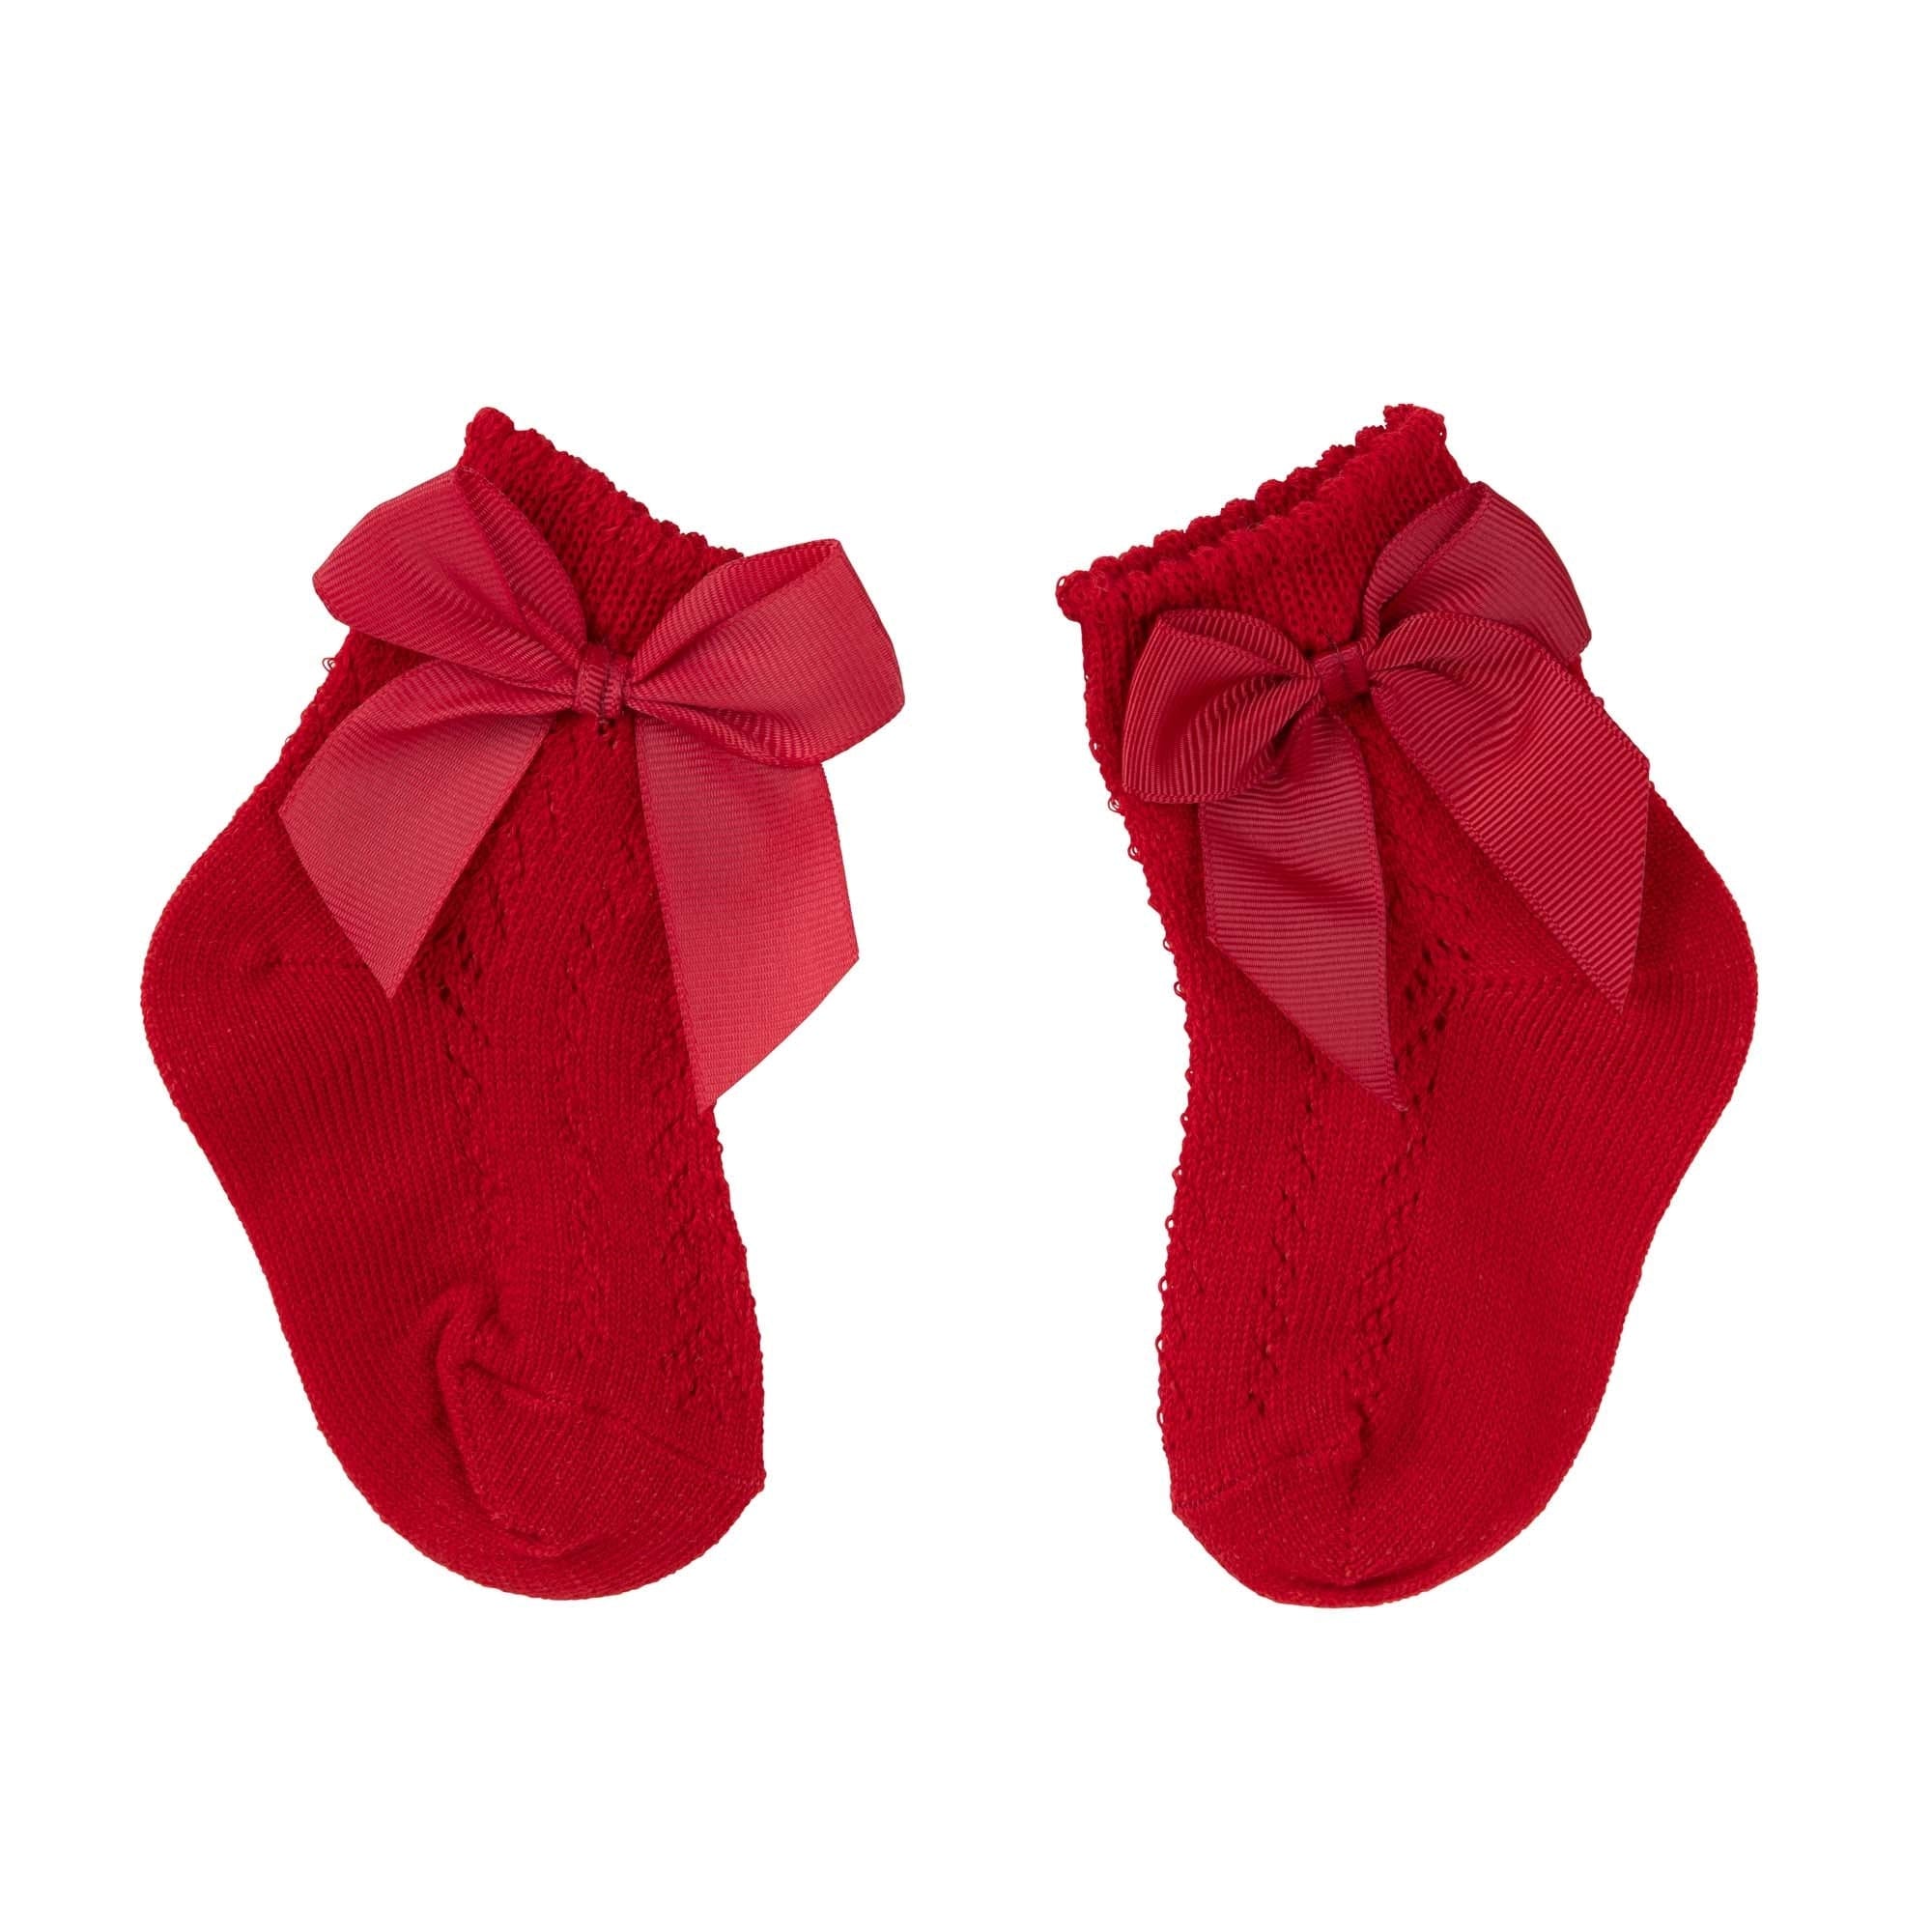 Designer Kidz Accessory Socks Baby Bow Crew Socks - Red